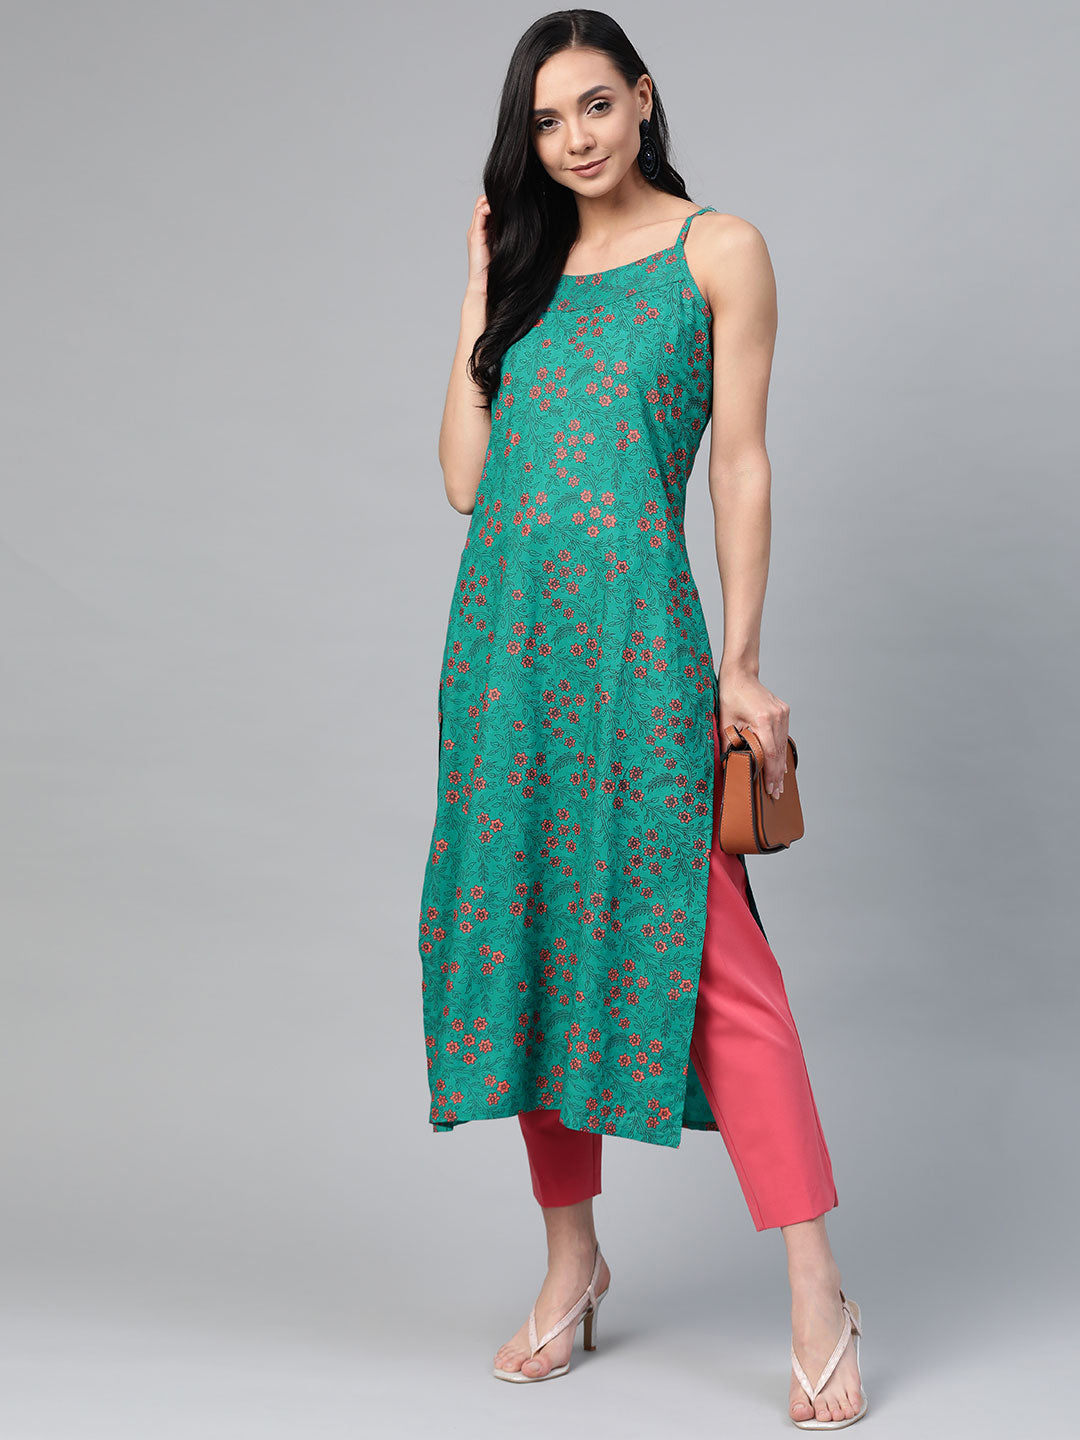 Women's strap kurti||#Strap dress design||Strap anarkali suit design||Short  kurti||#Summer kurti|| - YouTube